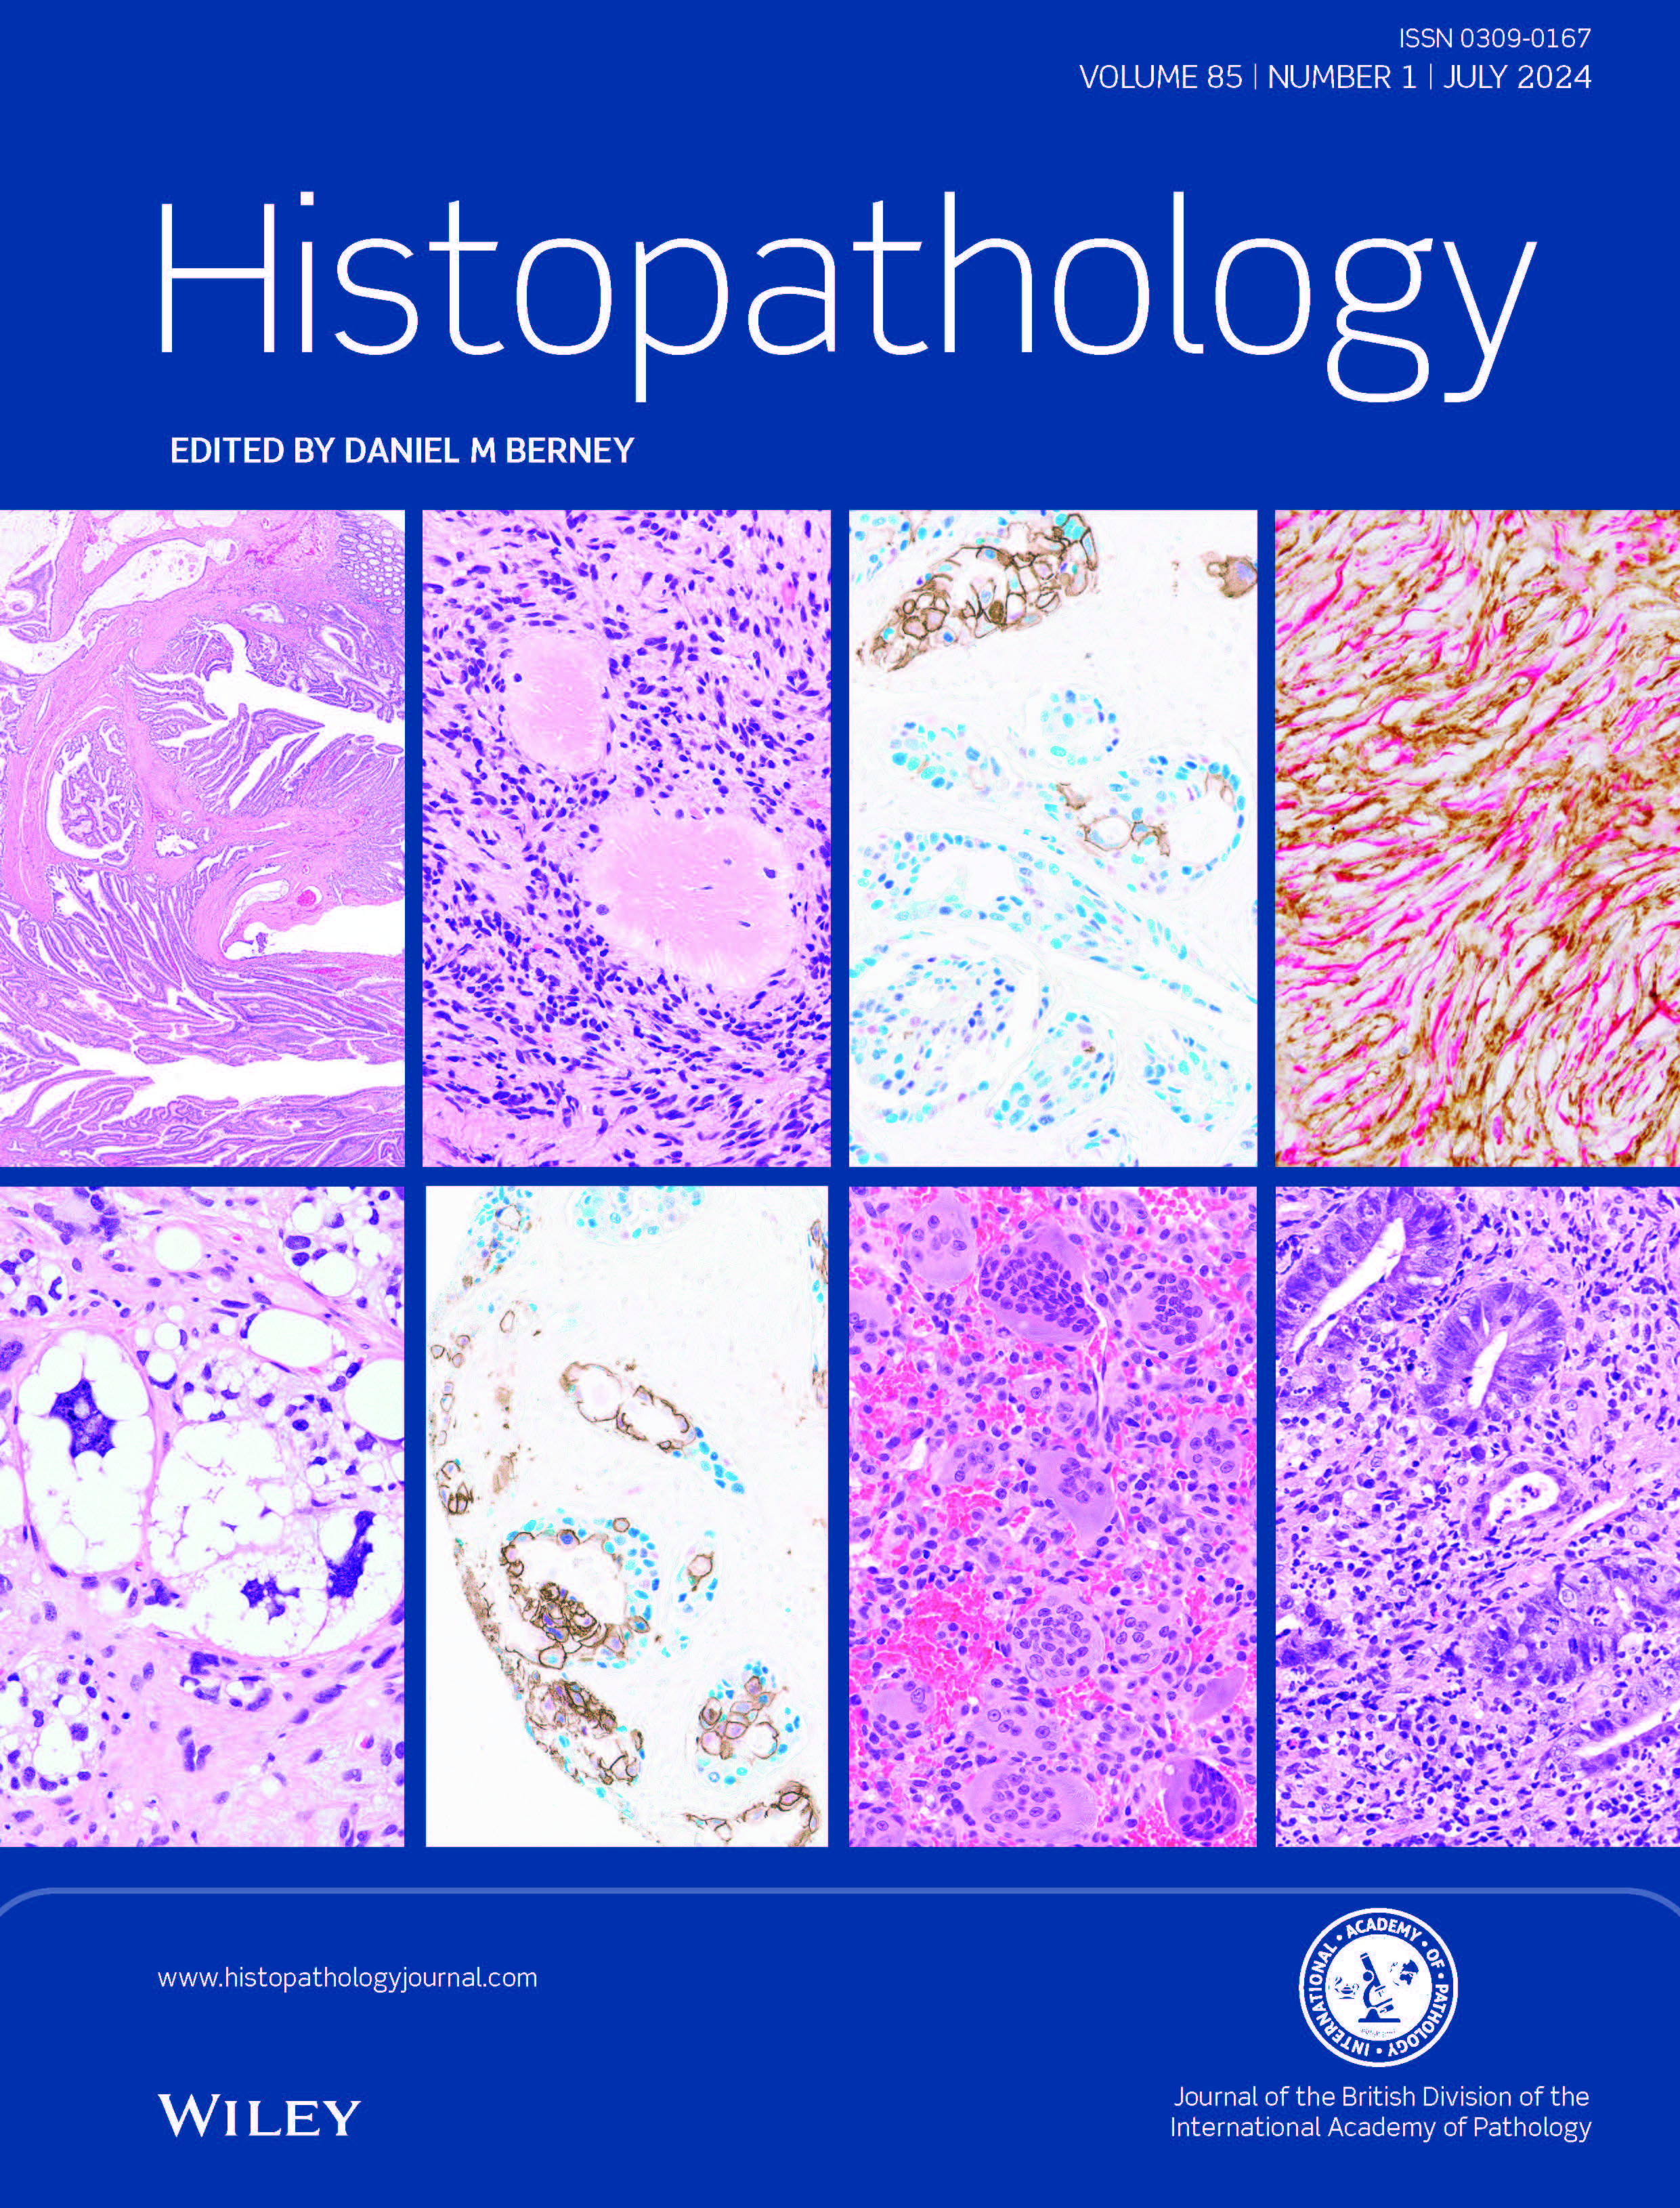 Histopathology Journal July 2024 